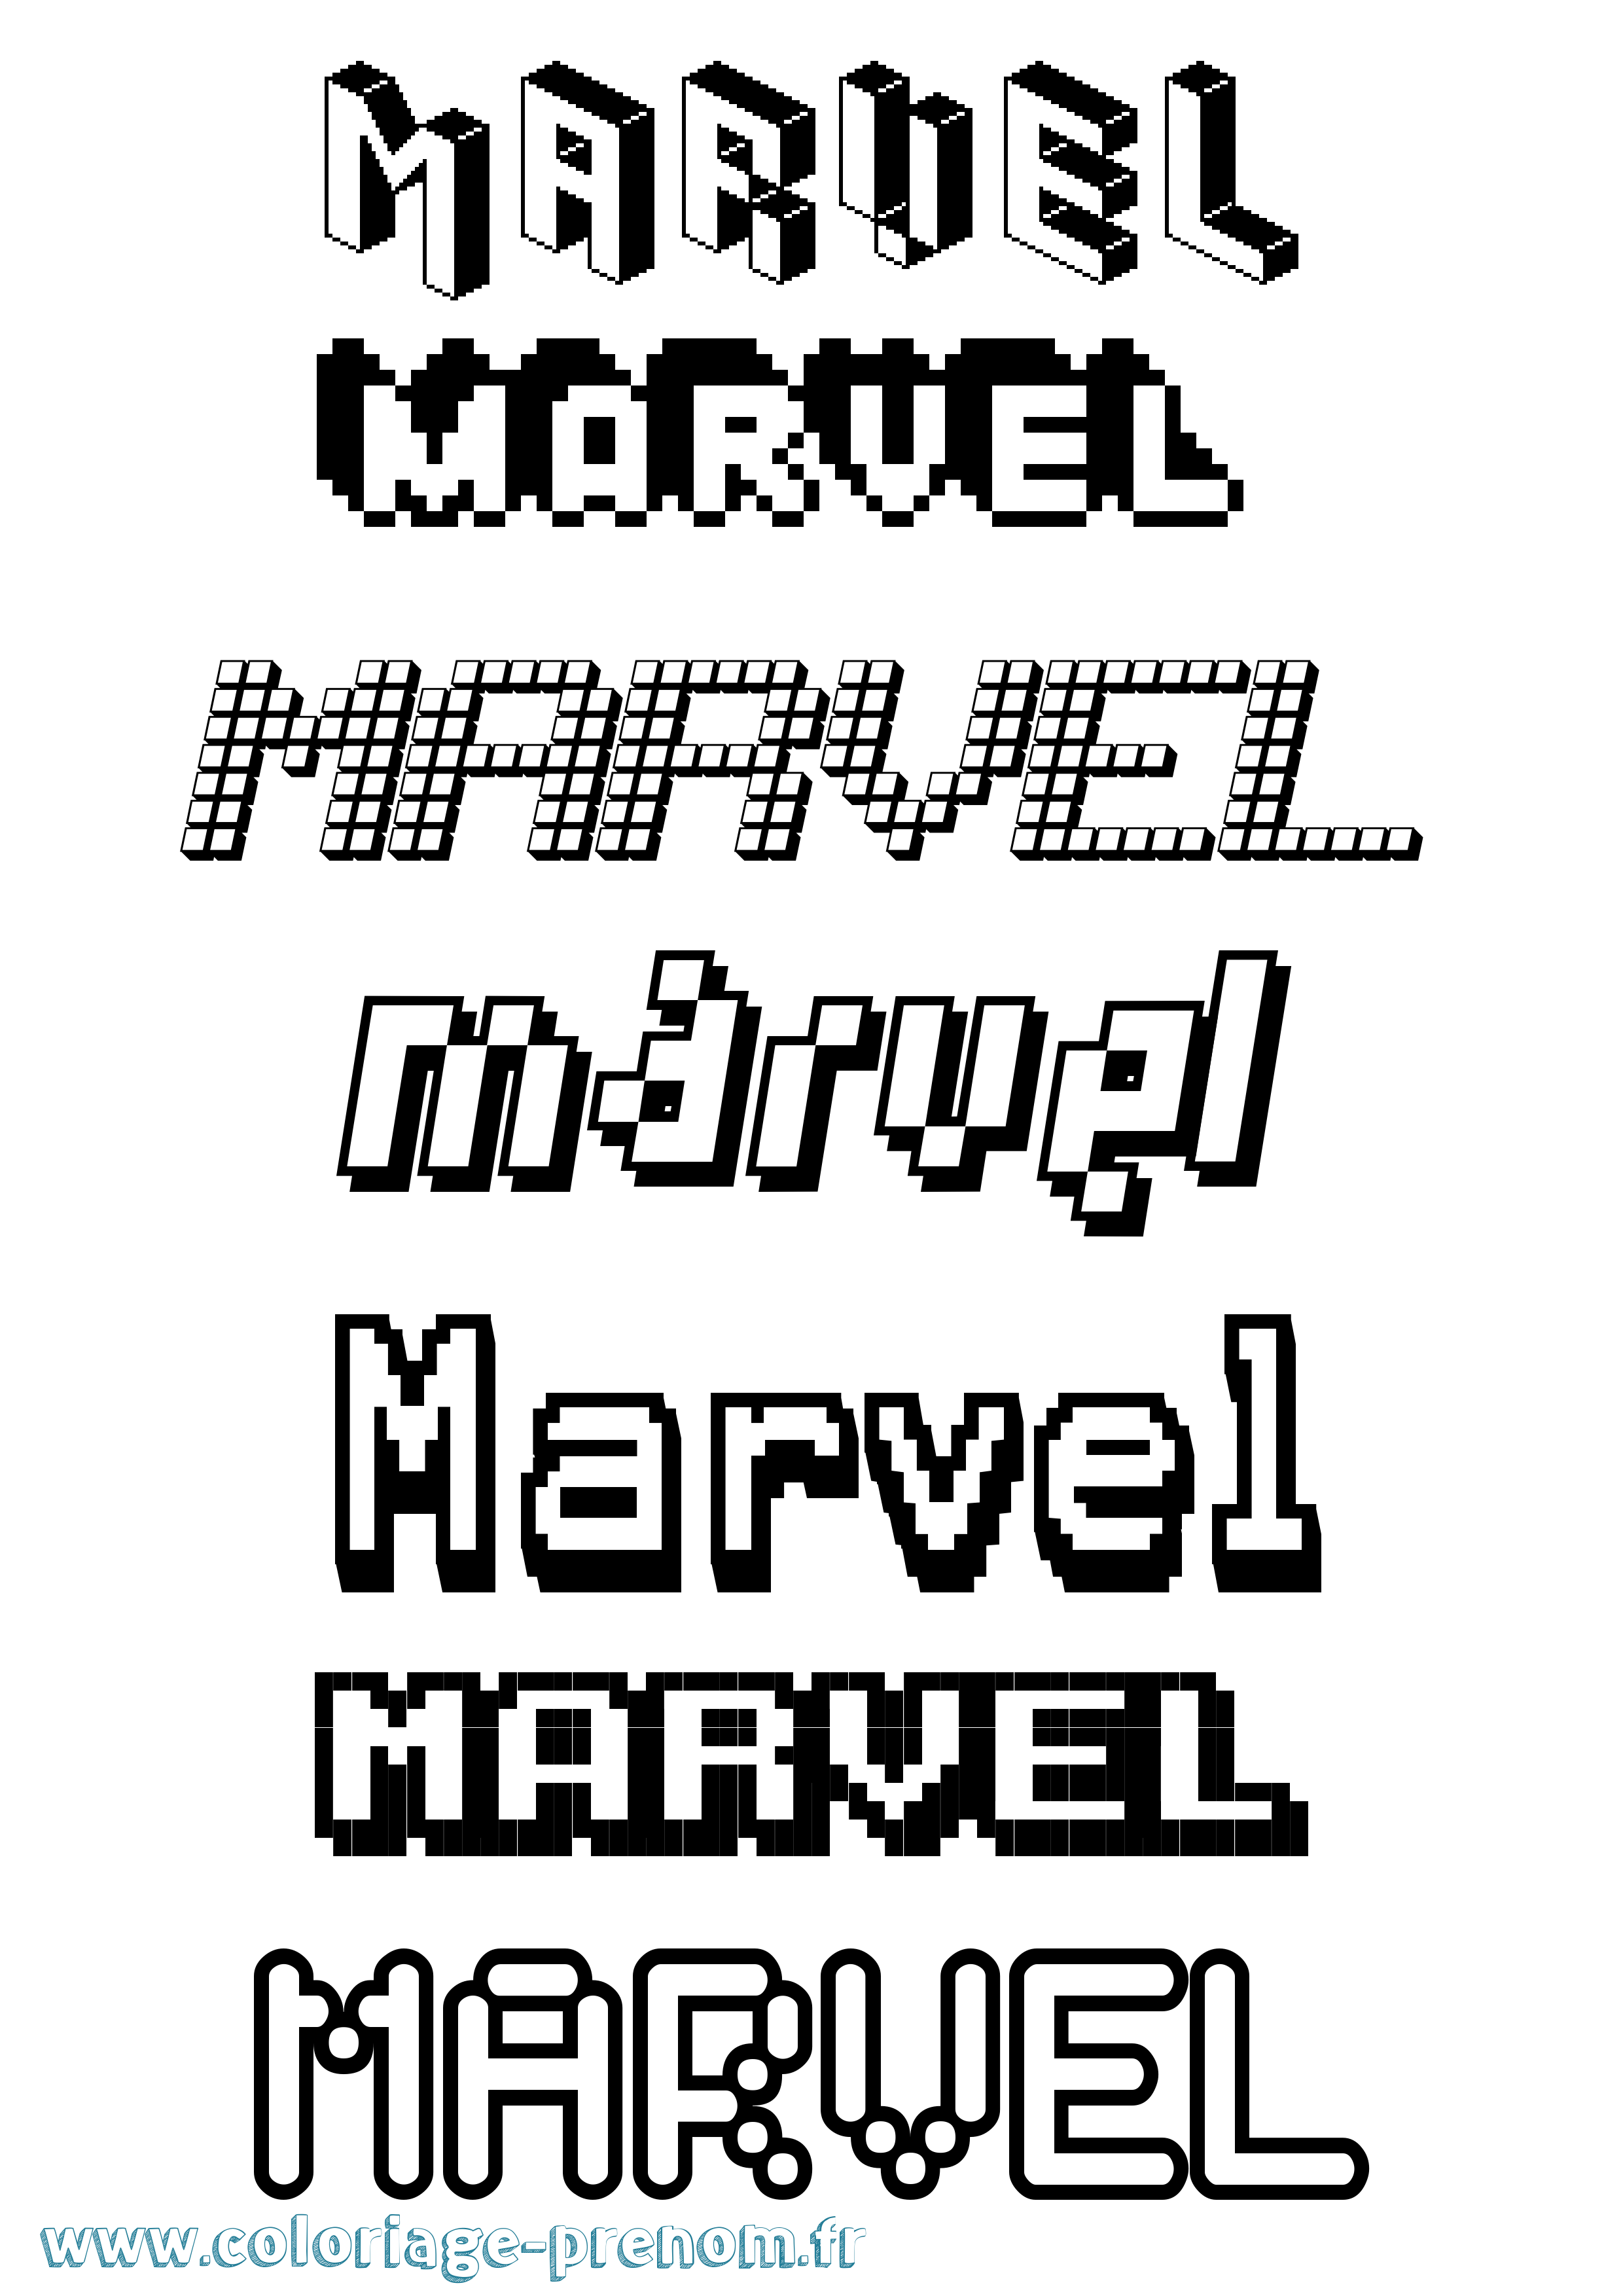 Coloriage prénom Marvel Pixel